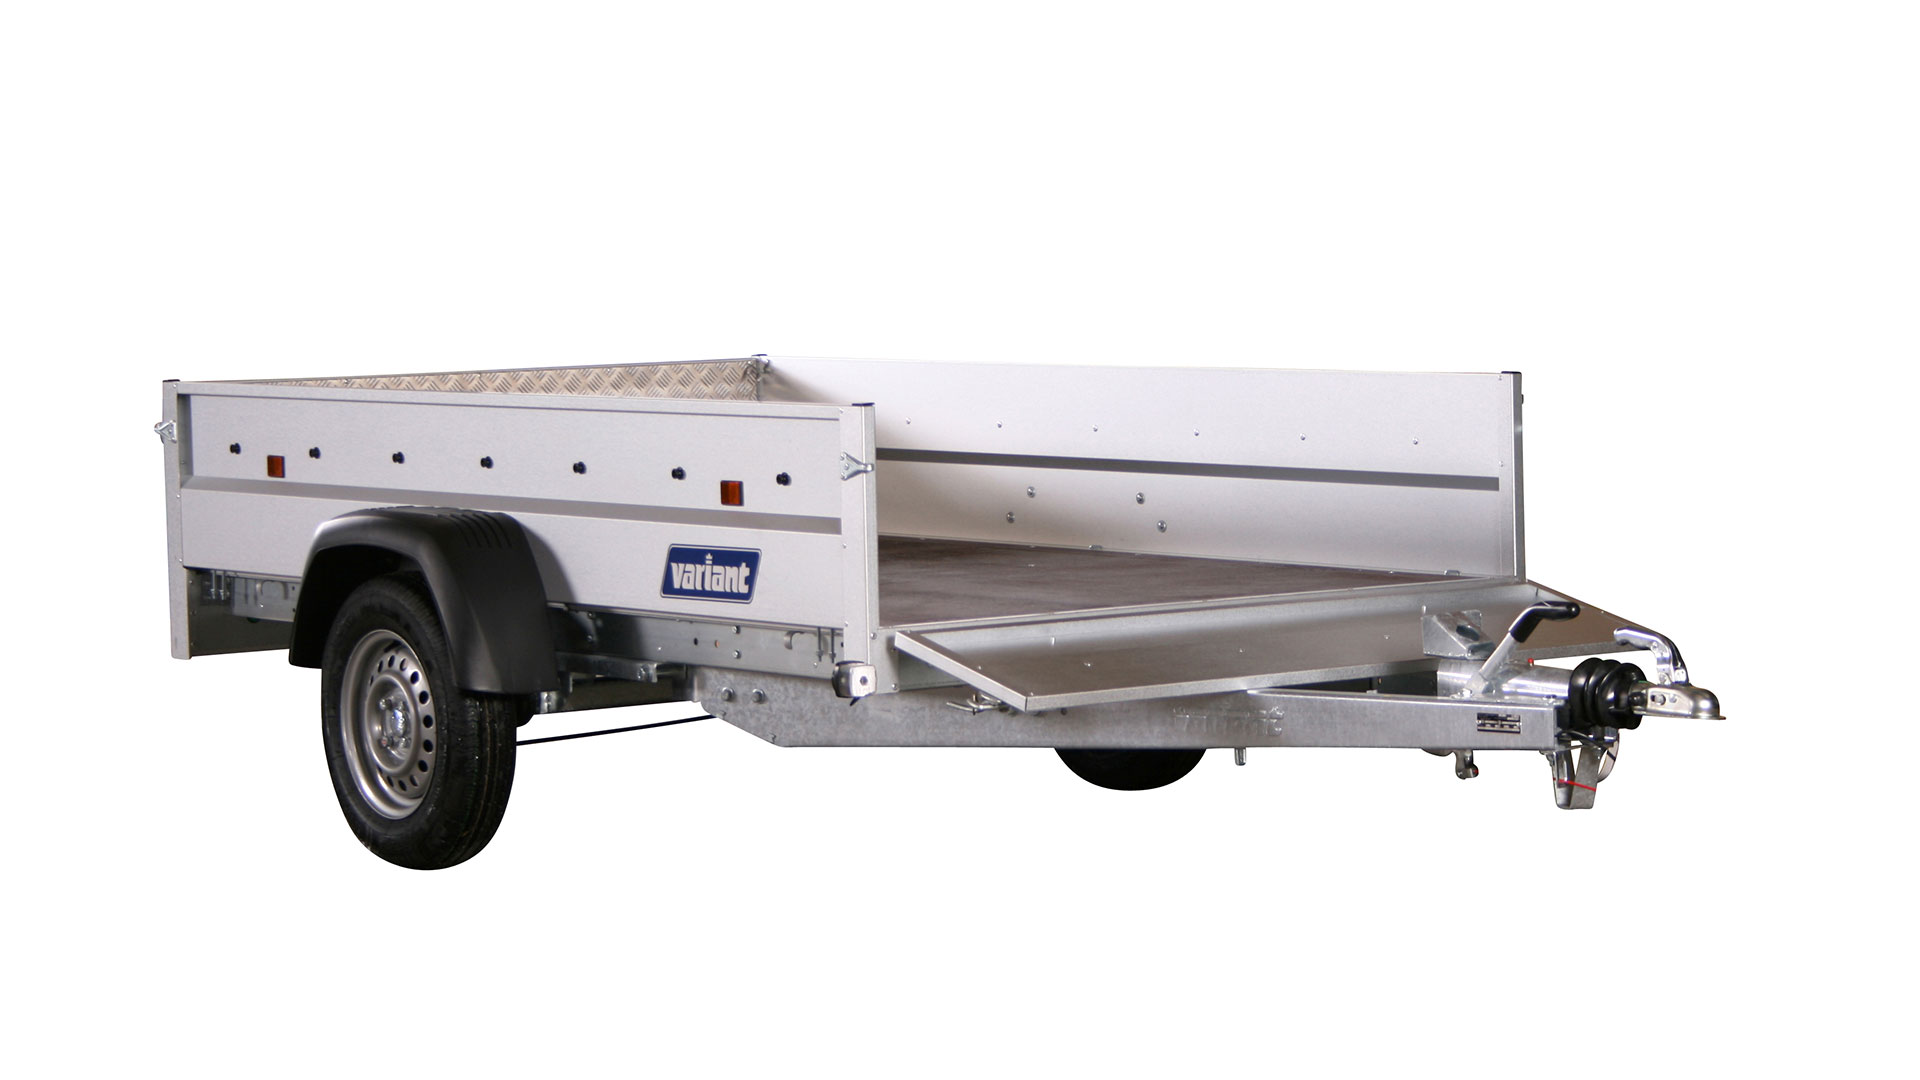 Variant PKW Anhänger Maschinentransporter 1304 Tip kippbar,1350 kg, Ladefläche 2,55 x 1,45 m, Stahlbordwände